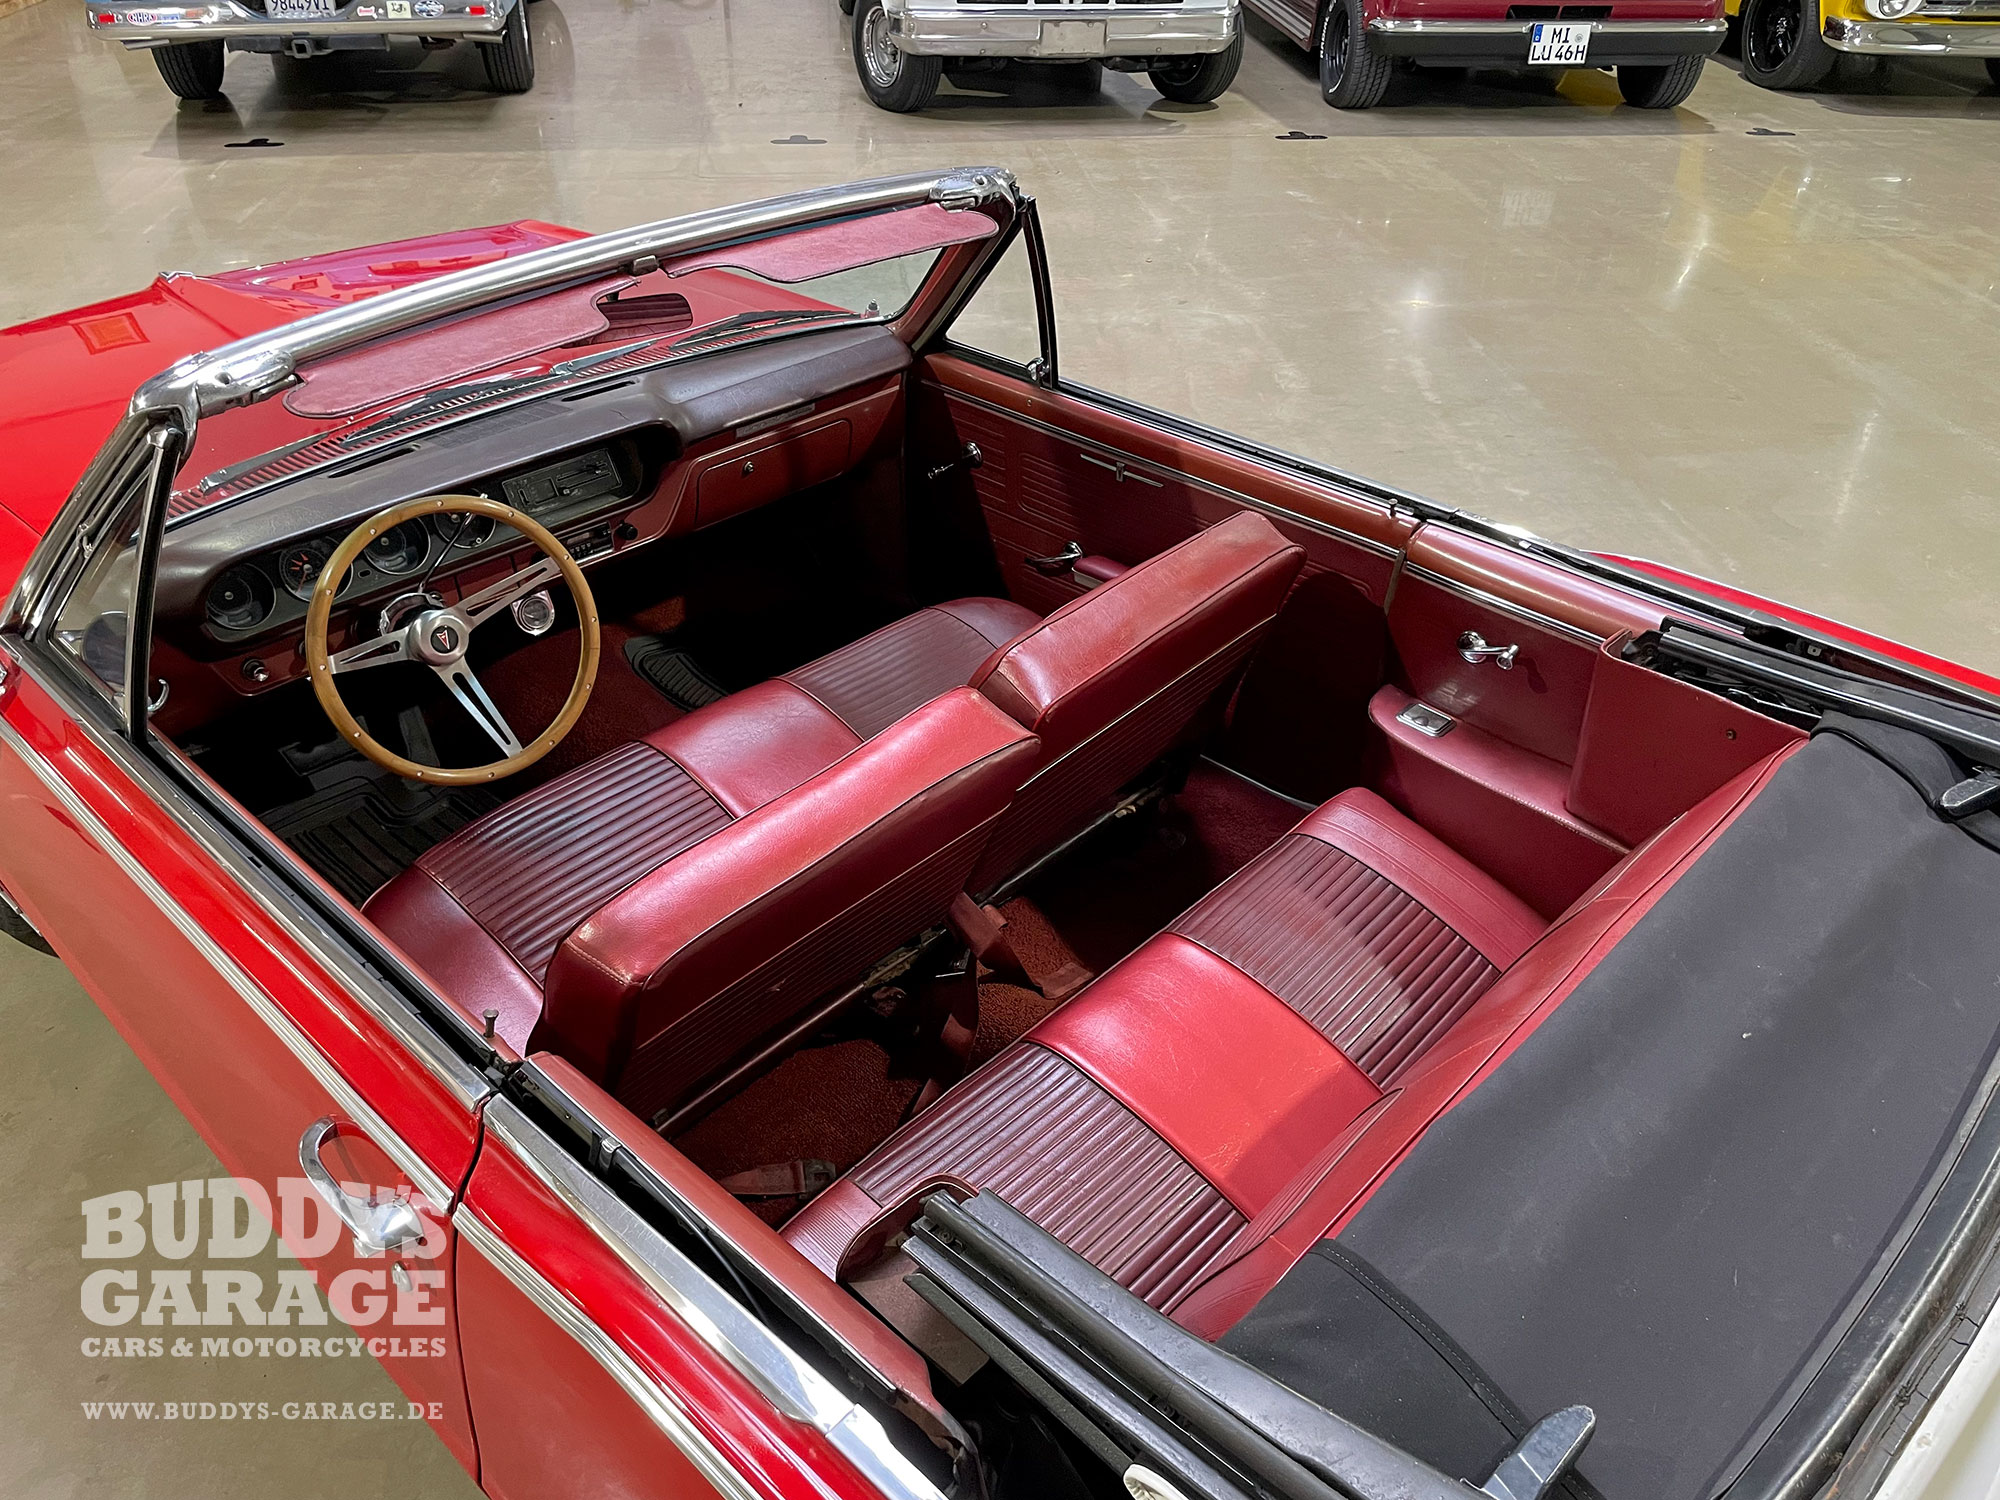 Pontiac Tempest Custom Convertible 1964 | Buddy's Garage Bad Oeynhausen